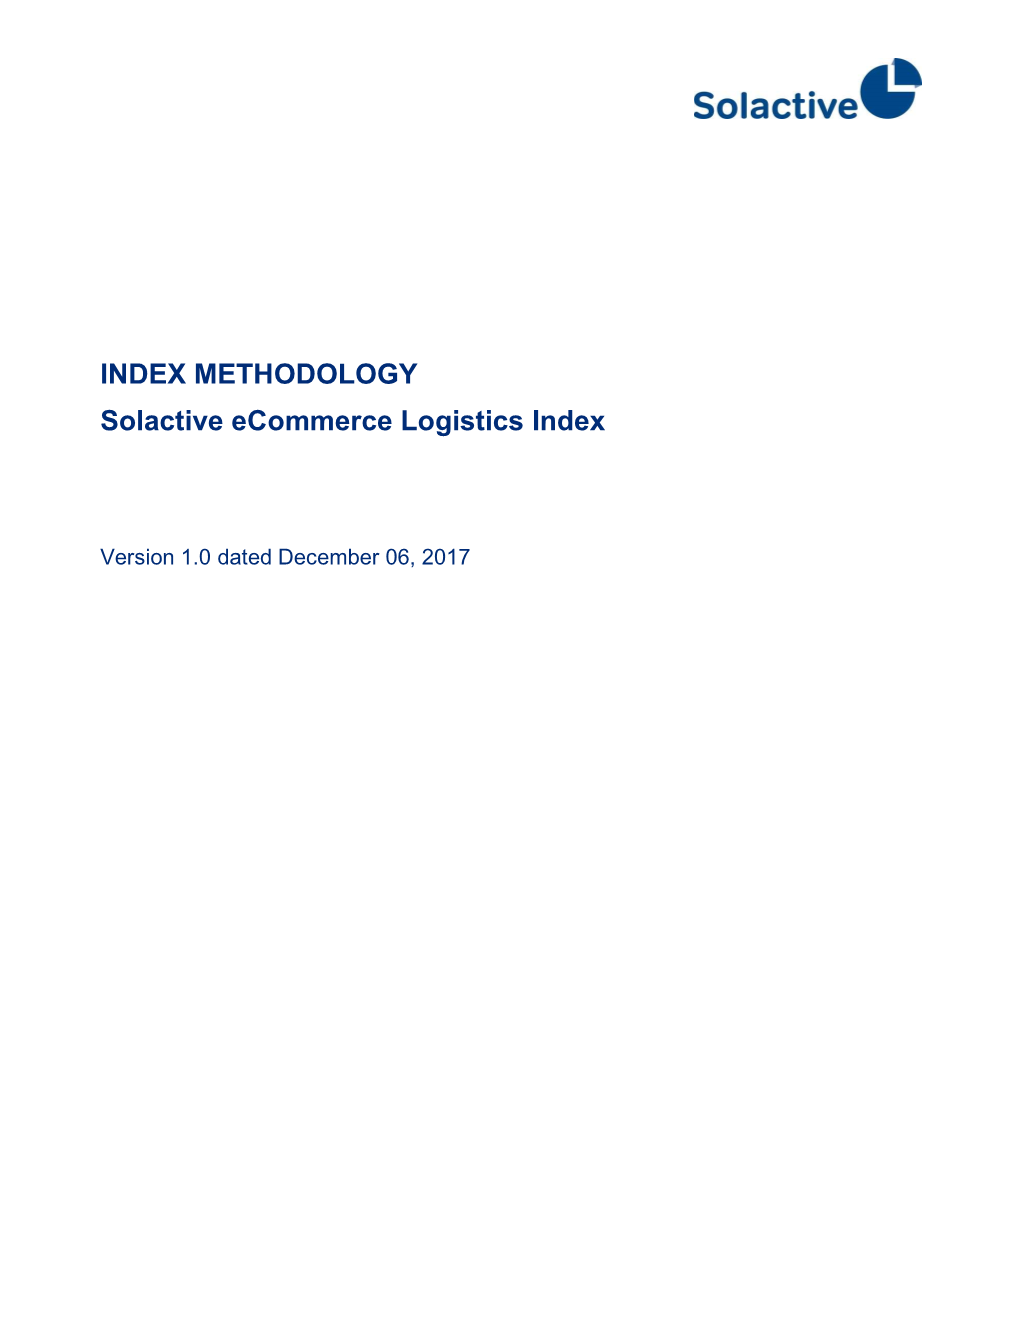 METHODOLOGY Solactive Ecommerce Logistics Index